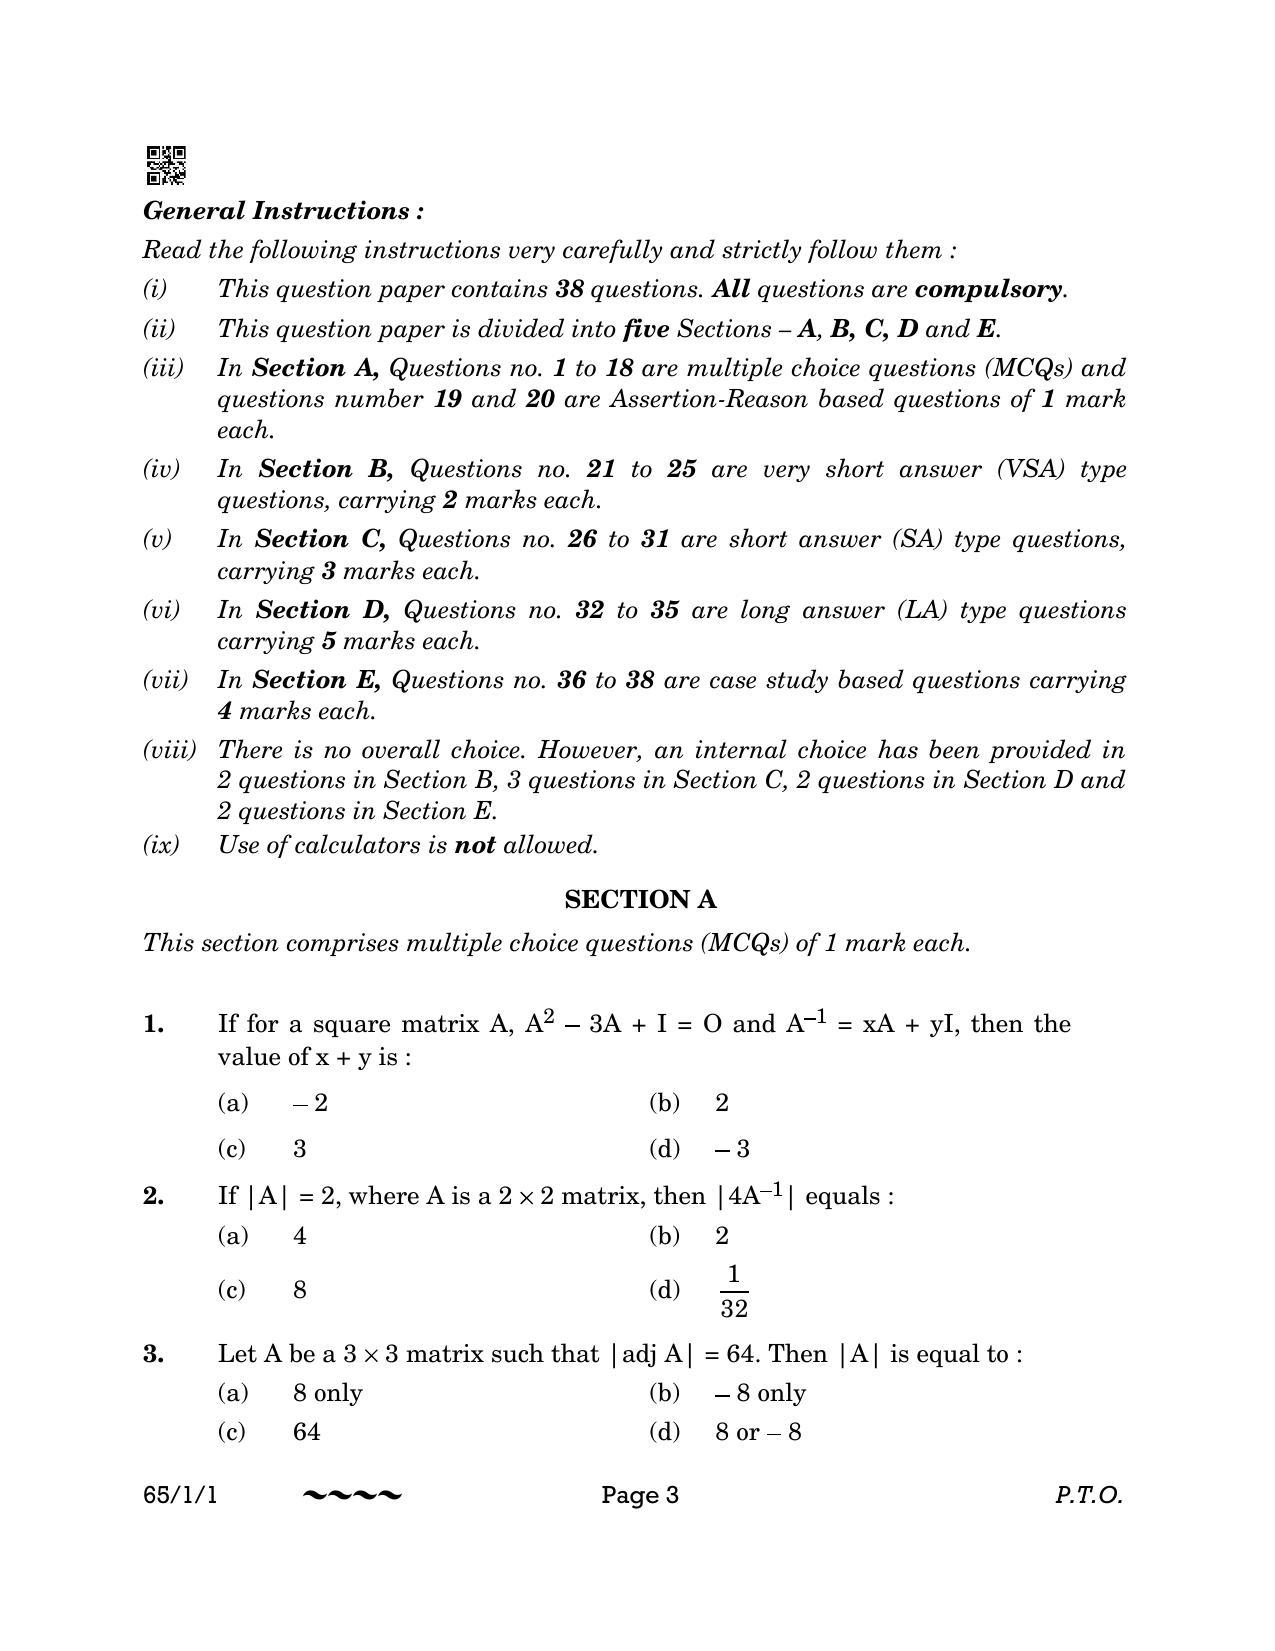 CBSE Class 12 65-1-1 MATHEMATICS 2023 Question Paper - Page 3